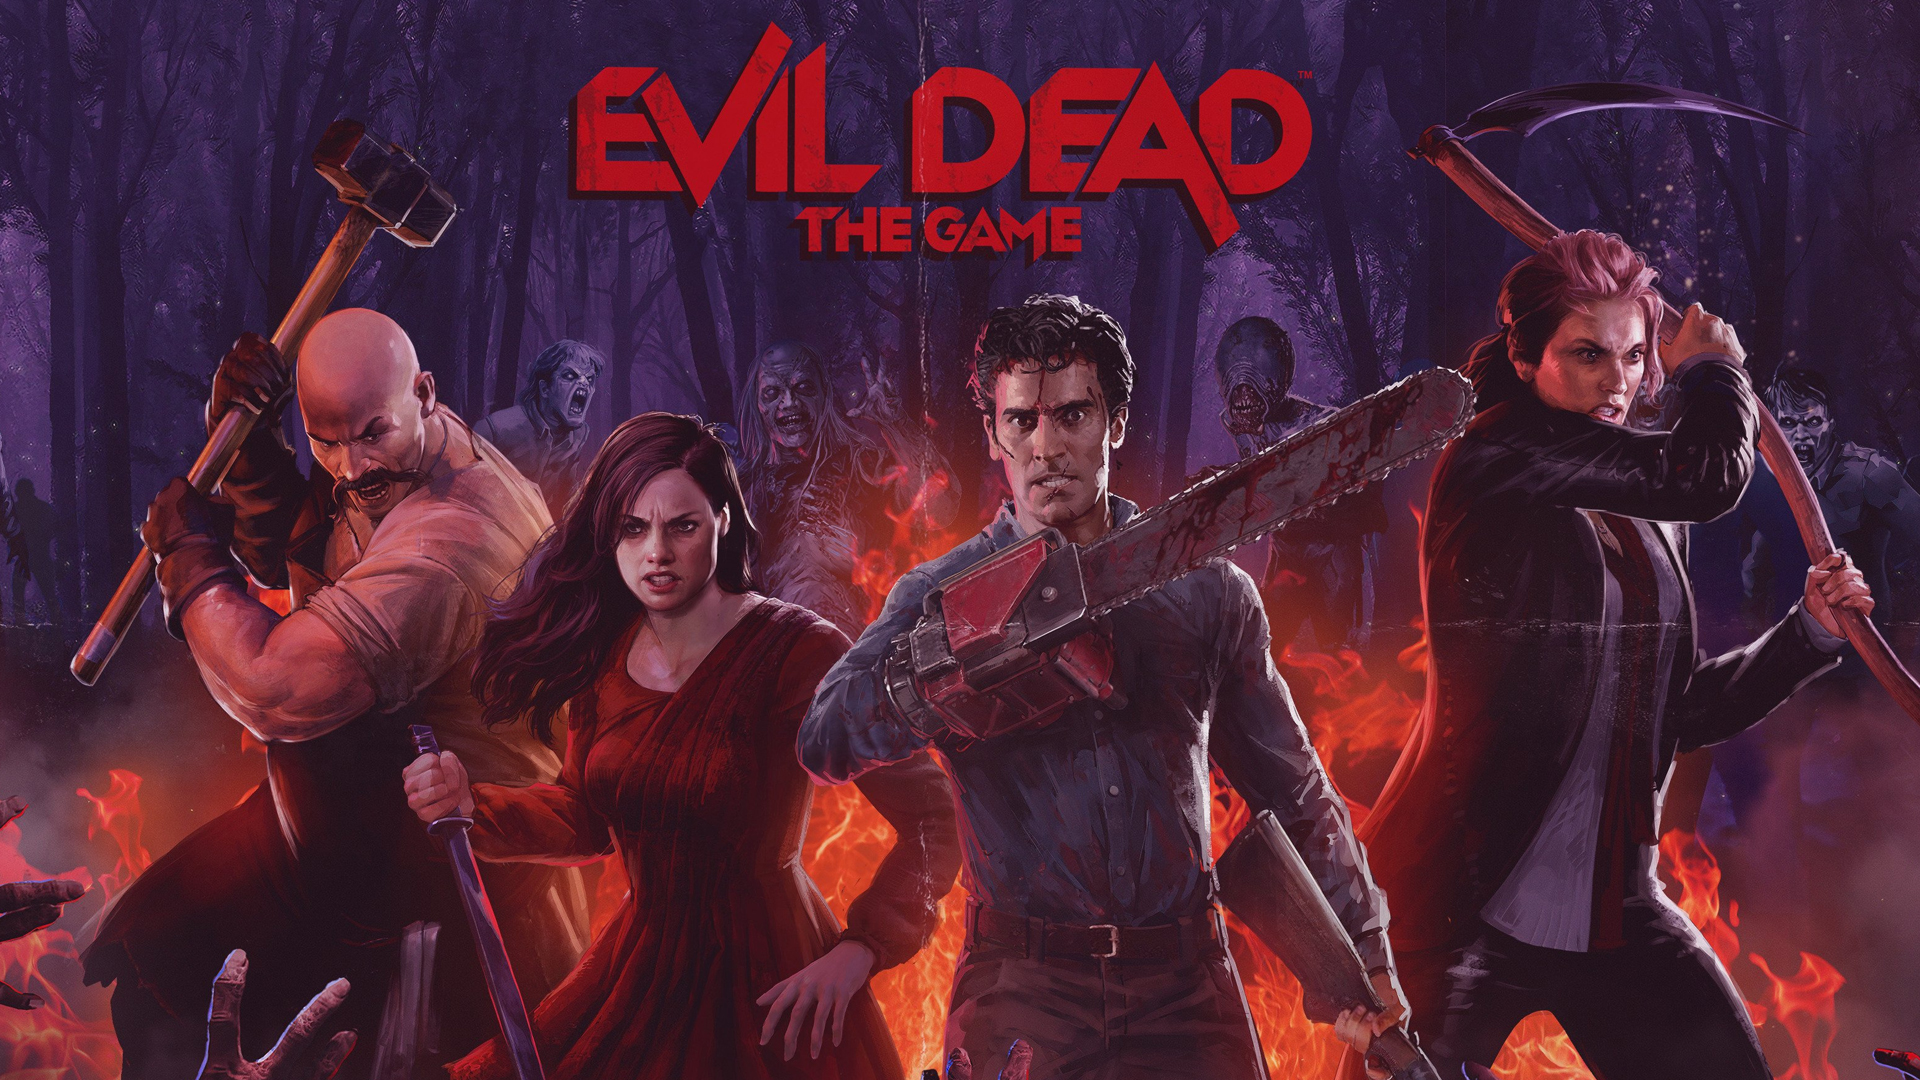  Evil Dead Regeneration - Xbox : Artist Not Provided